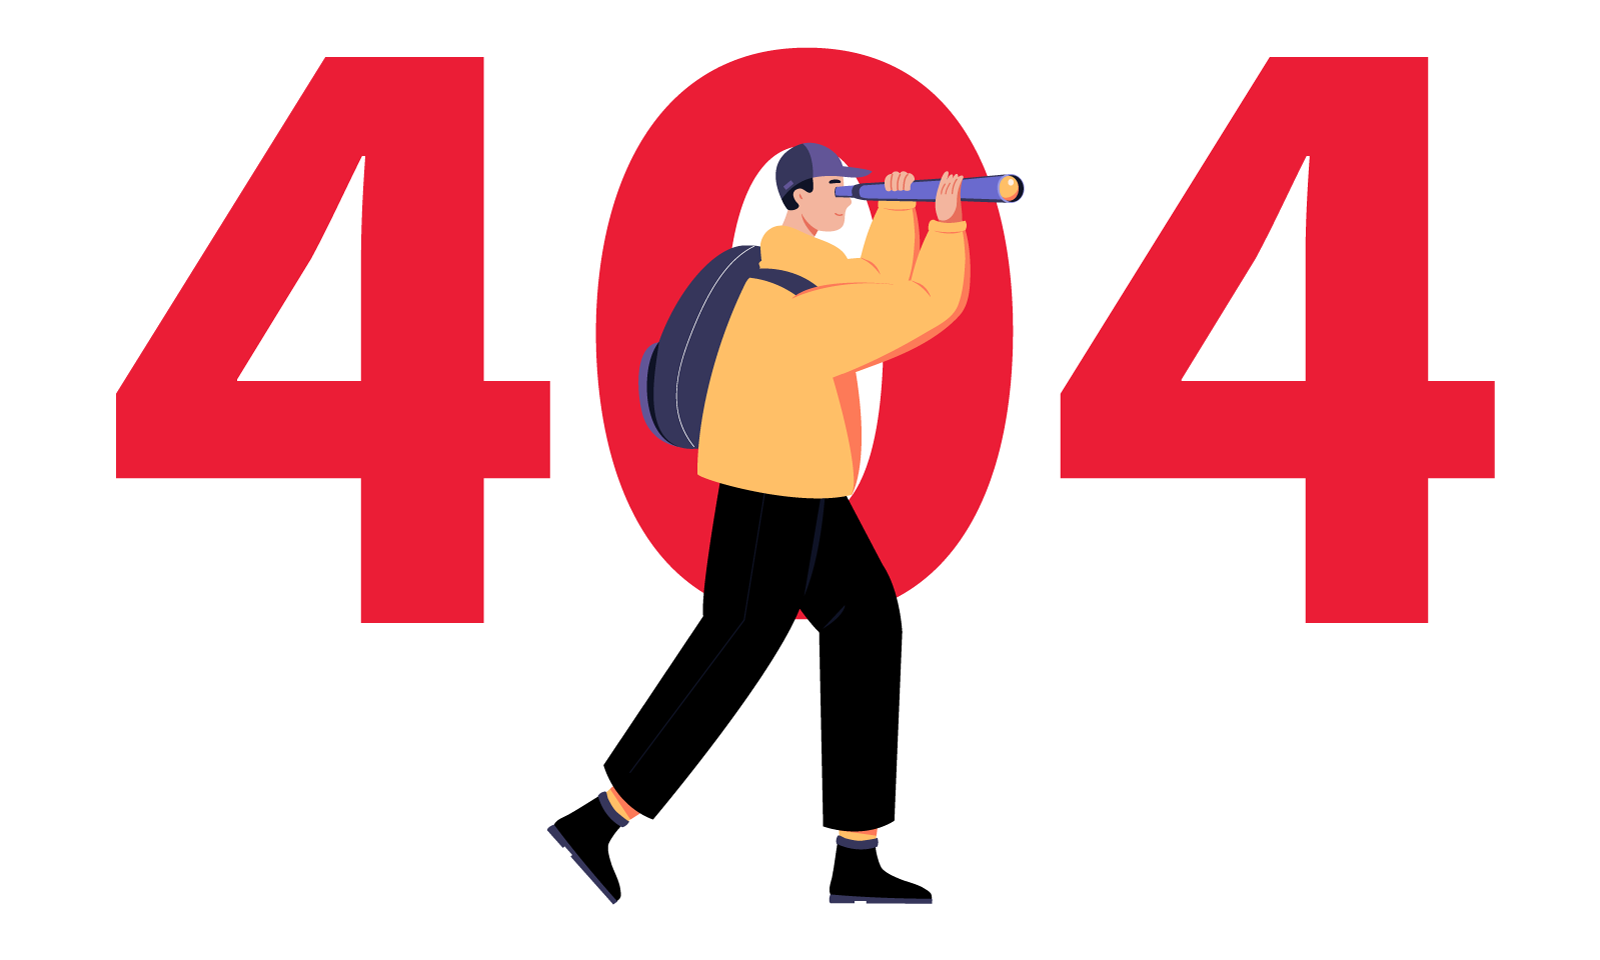 404-web